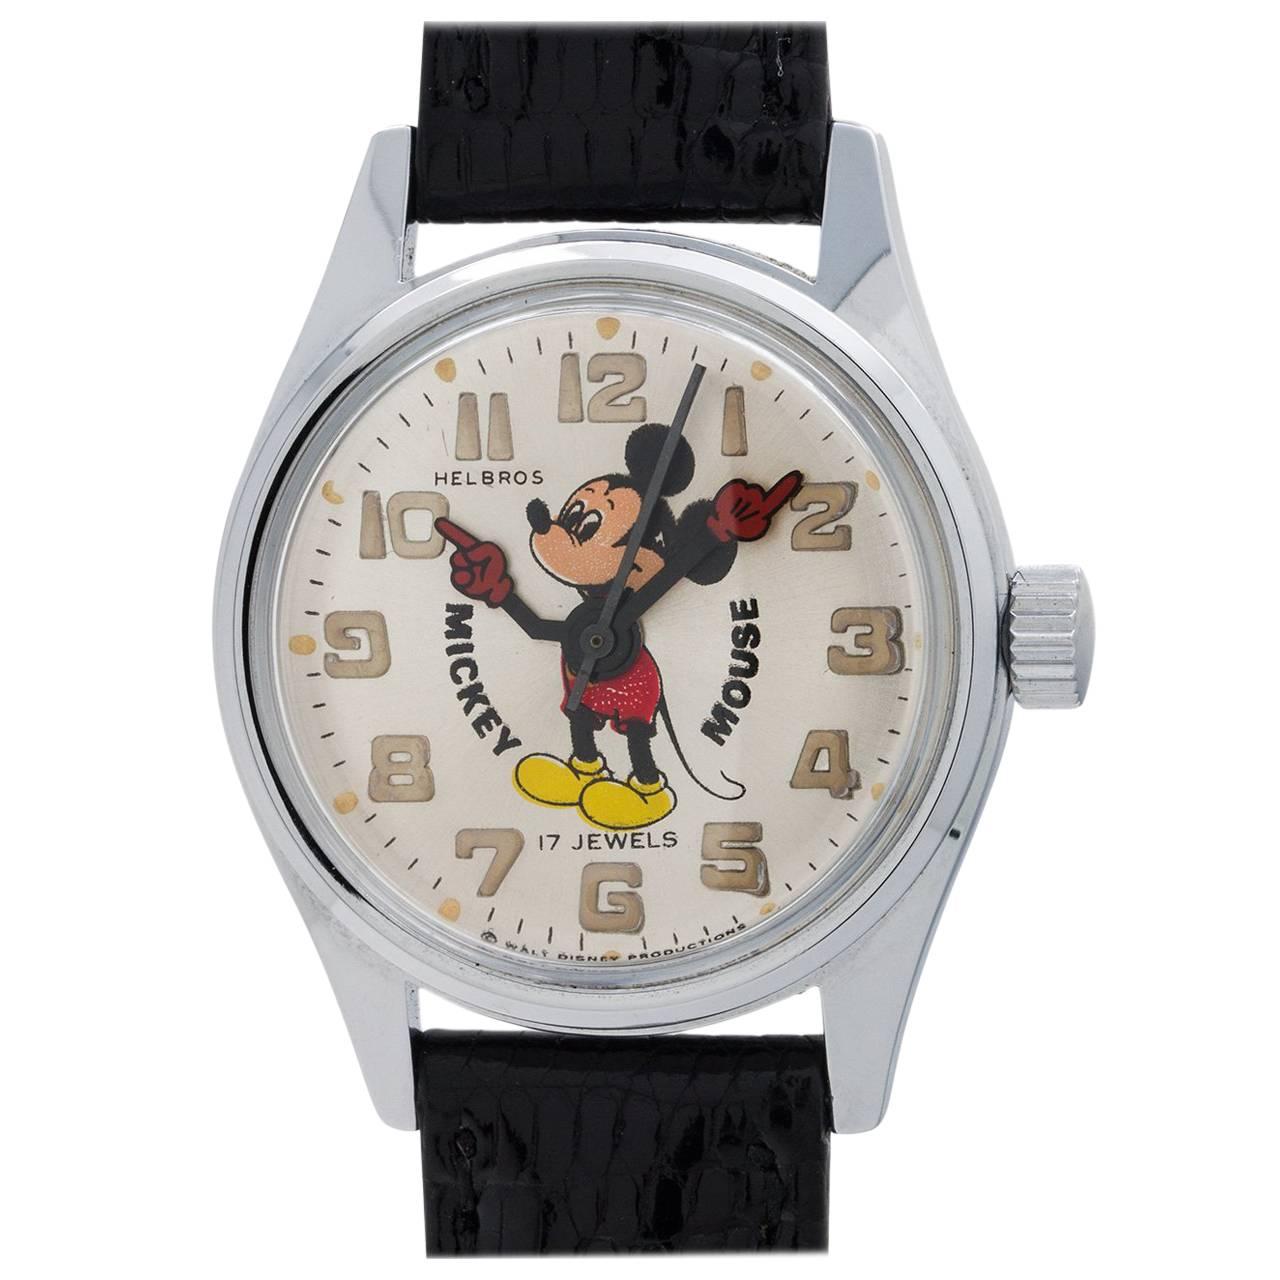 Helbros Mickey Mouse Manual Wristwatch, circa 1970s